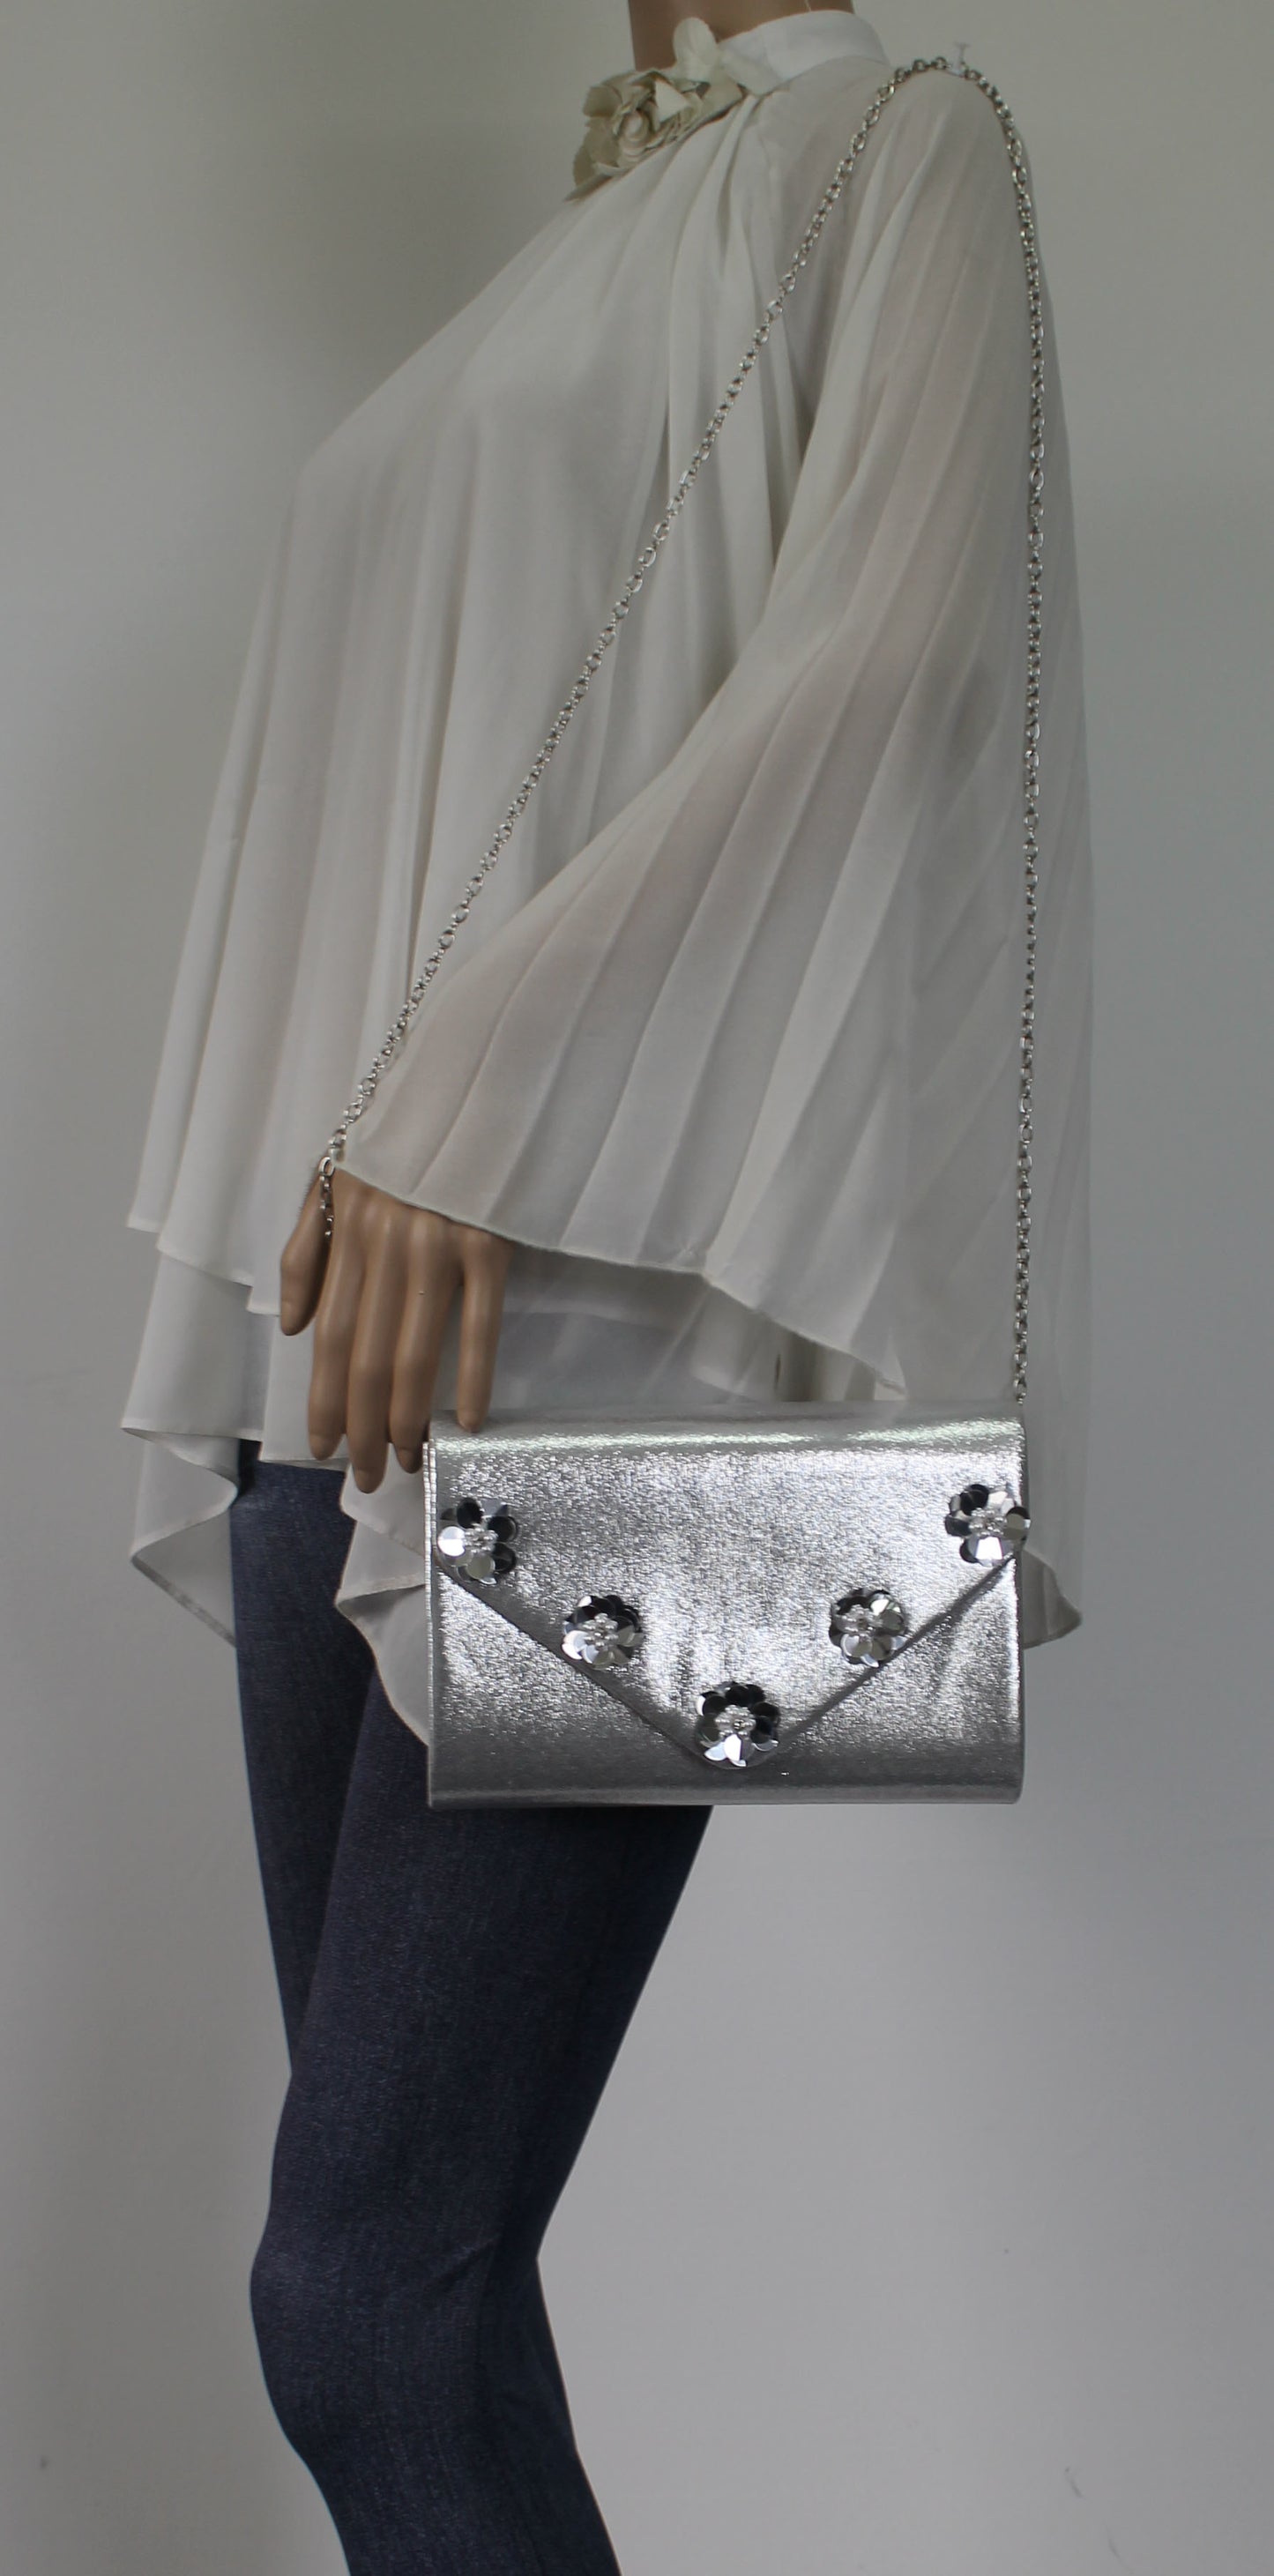 SWANKYSWANS Josie Clutch Bag Silver Cute Cheap Clutch Bag For Weddings School and Work